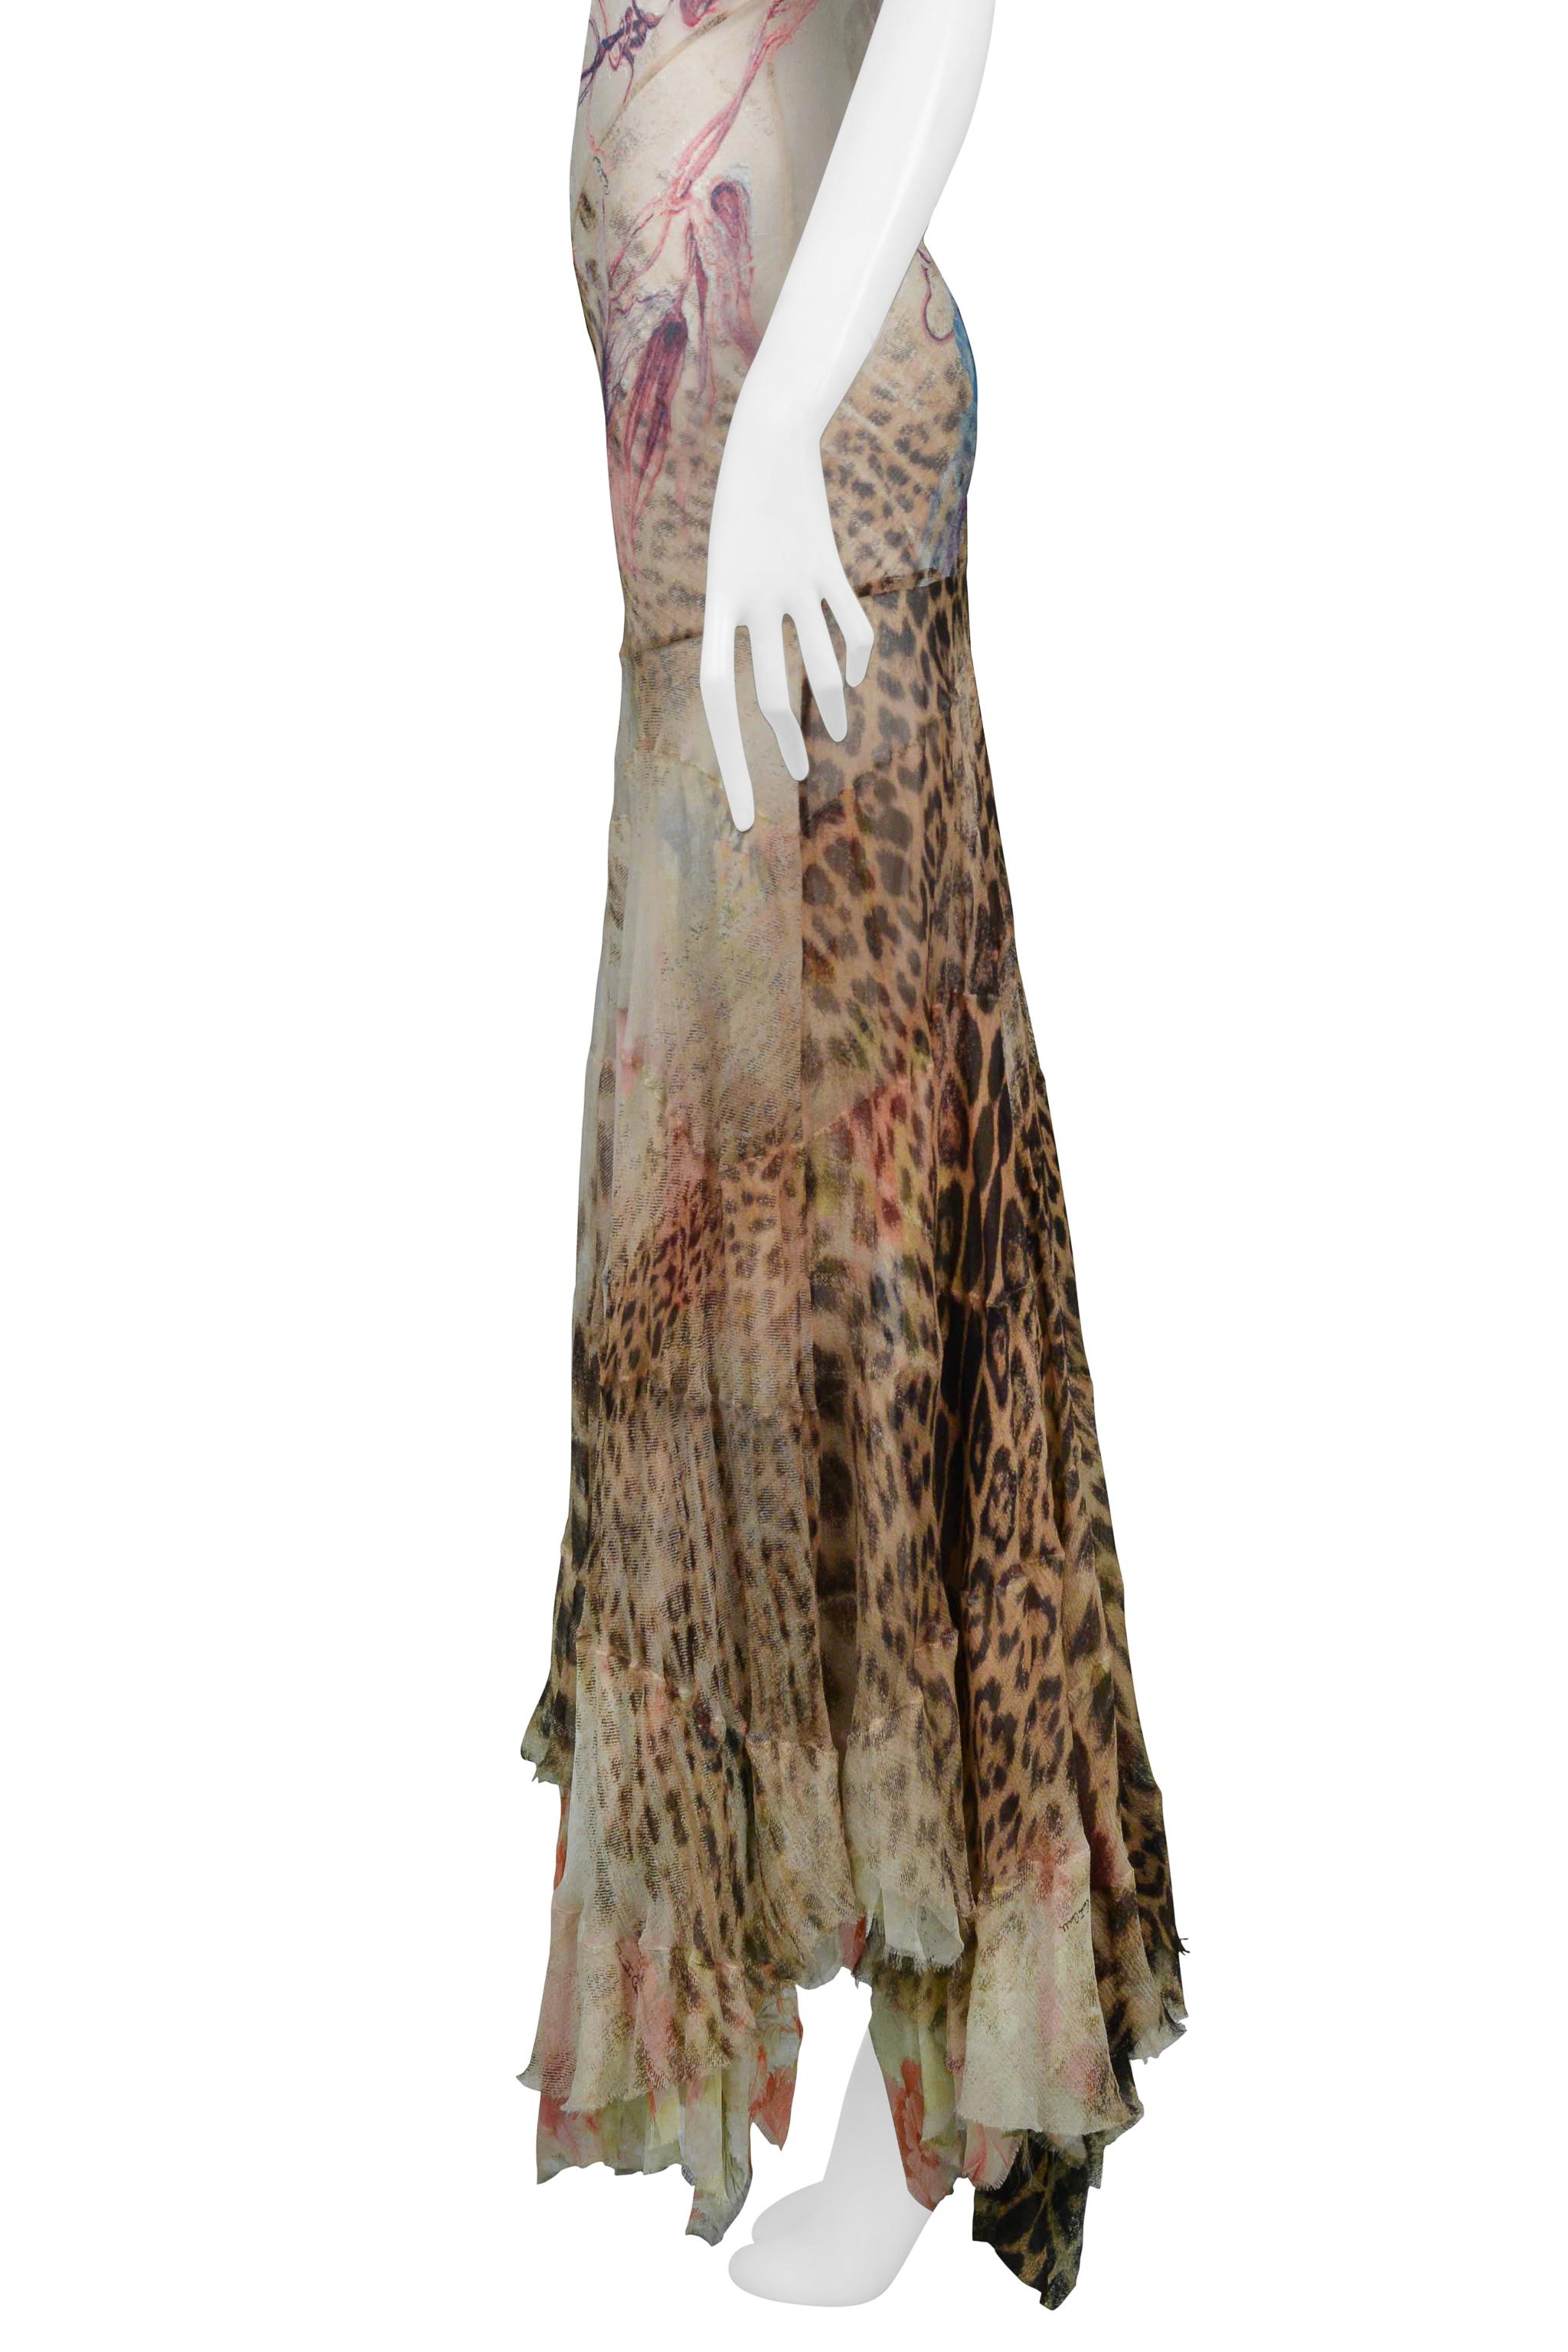 Roberto Cavalli Floral & Leopard Print Evening Gown 2002 2